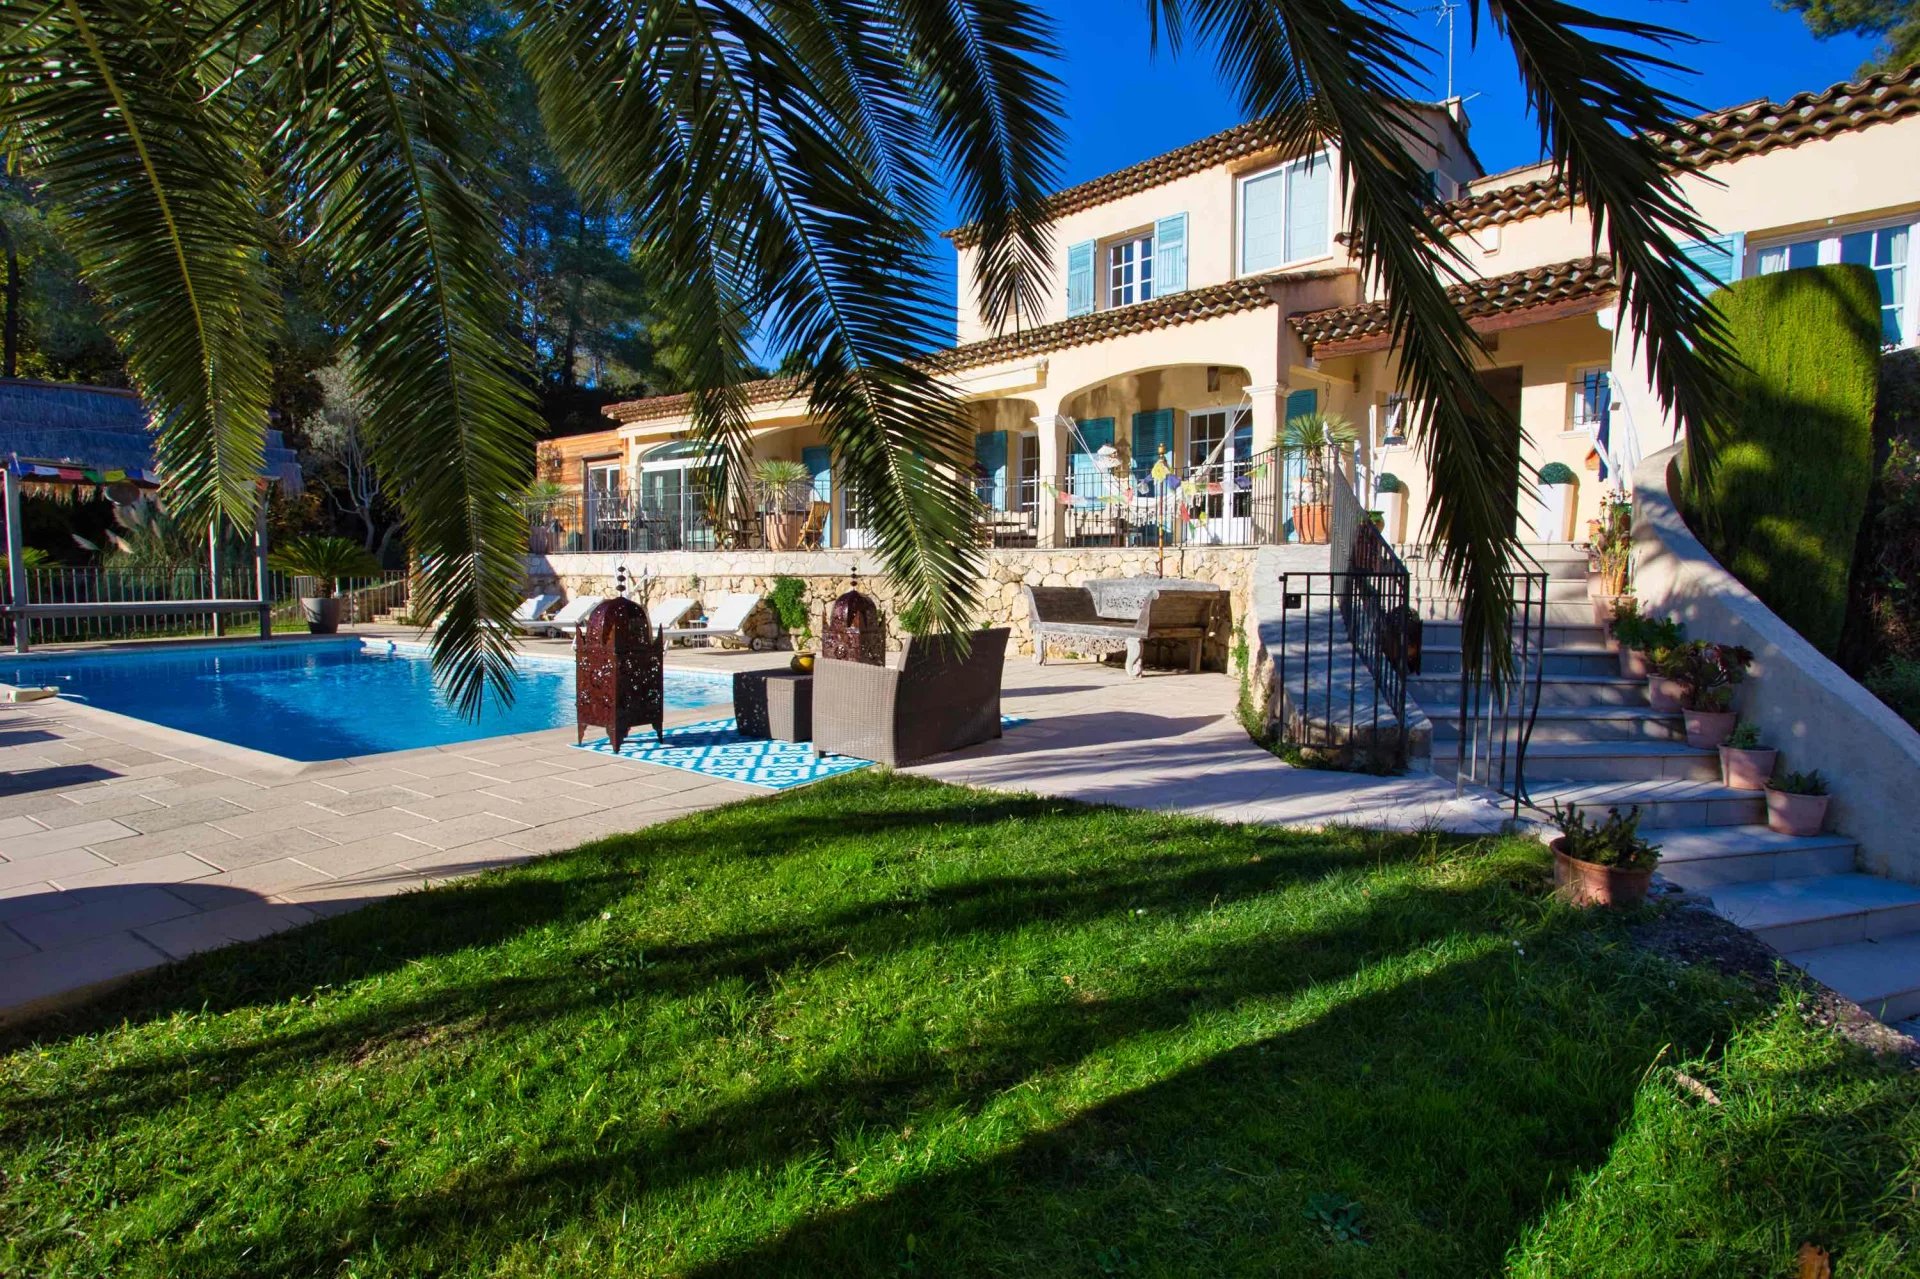 A vendre villa familiale 8P 6 chbres 270 m2 avec piscine au calme absolu